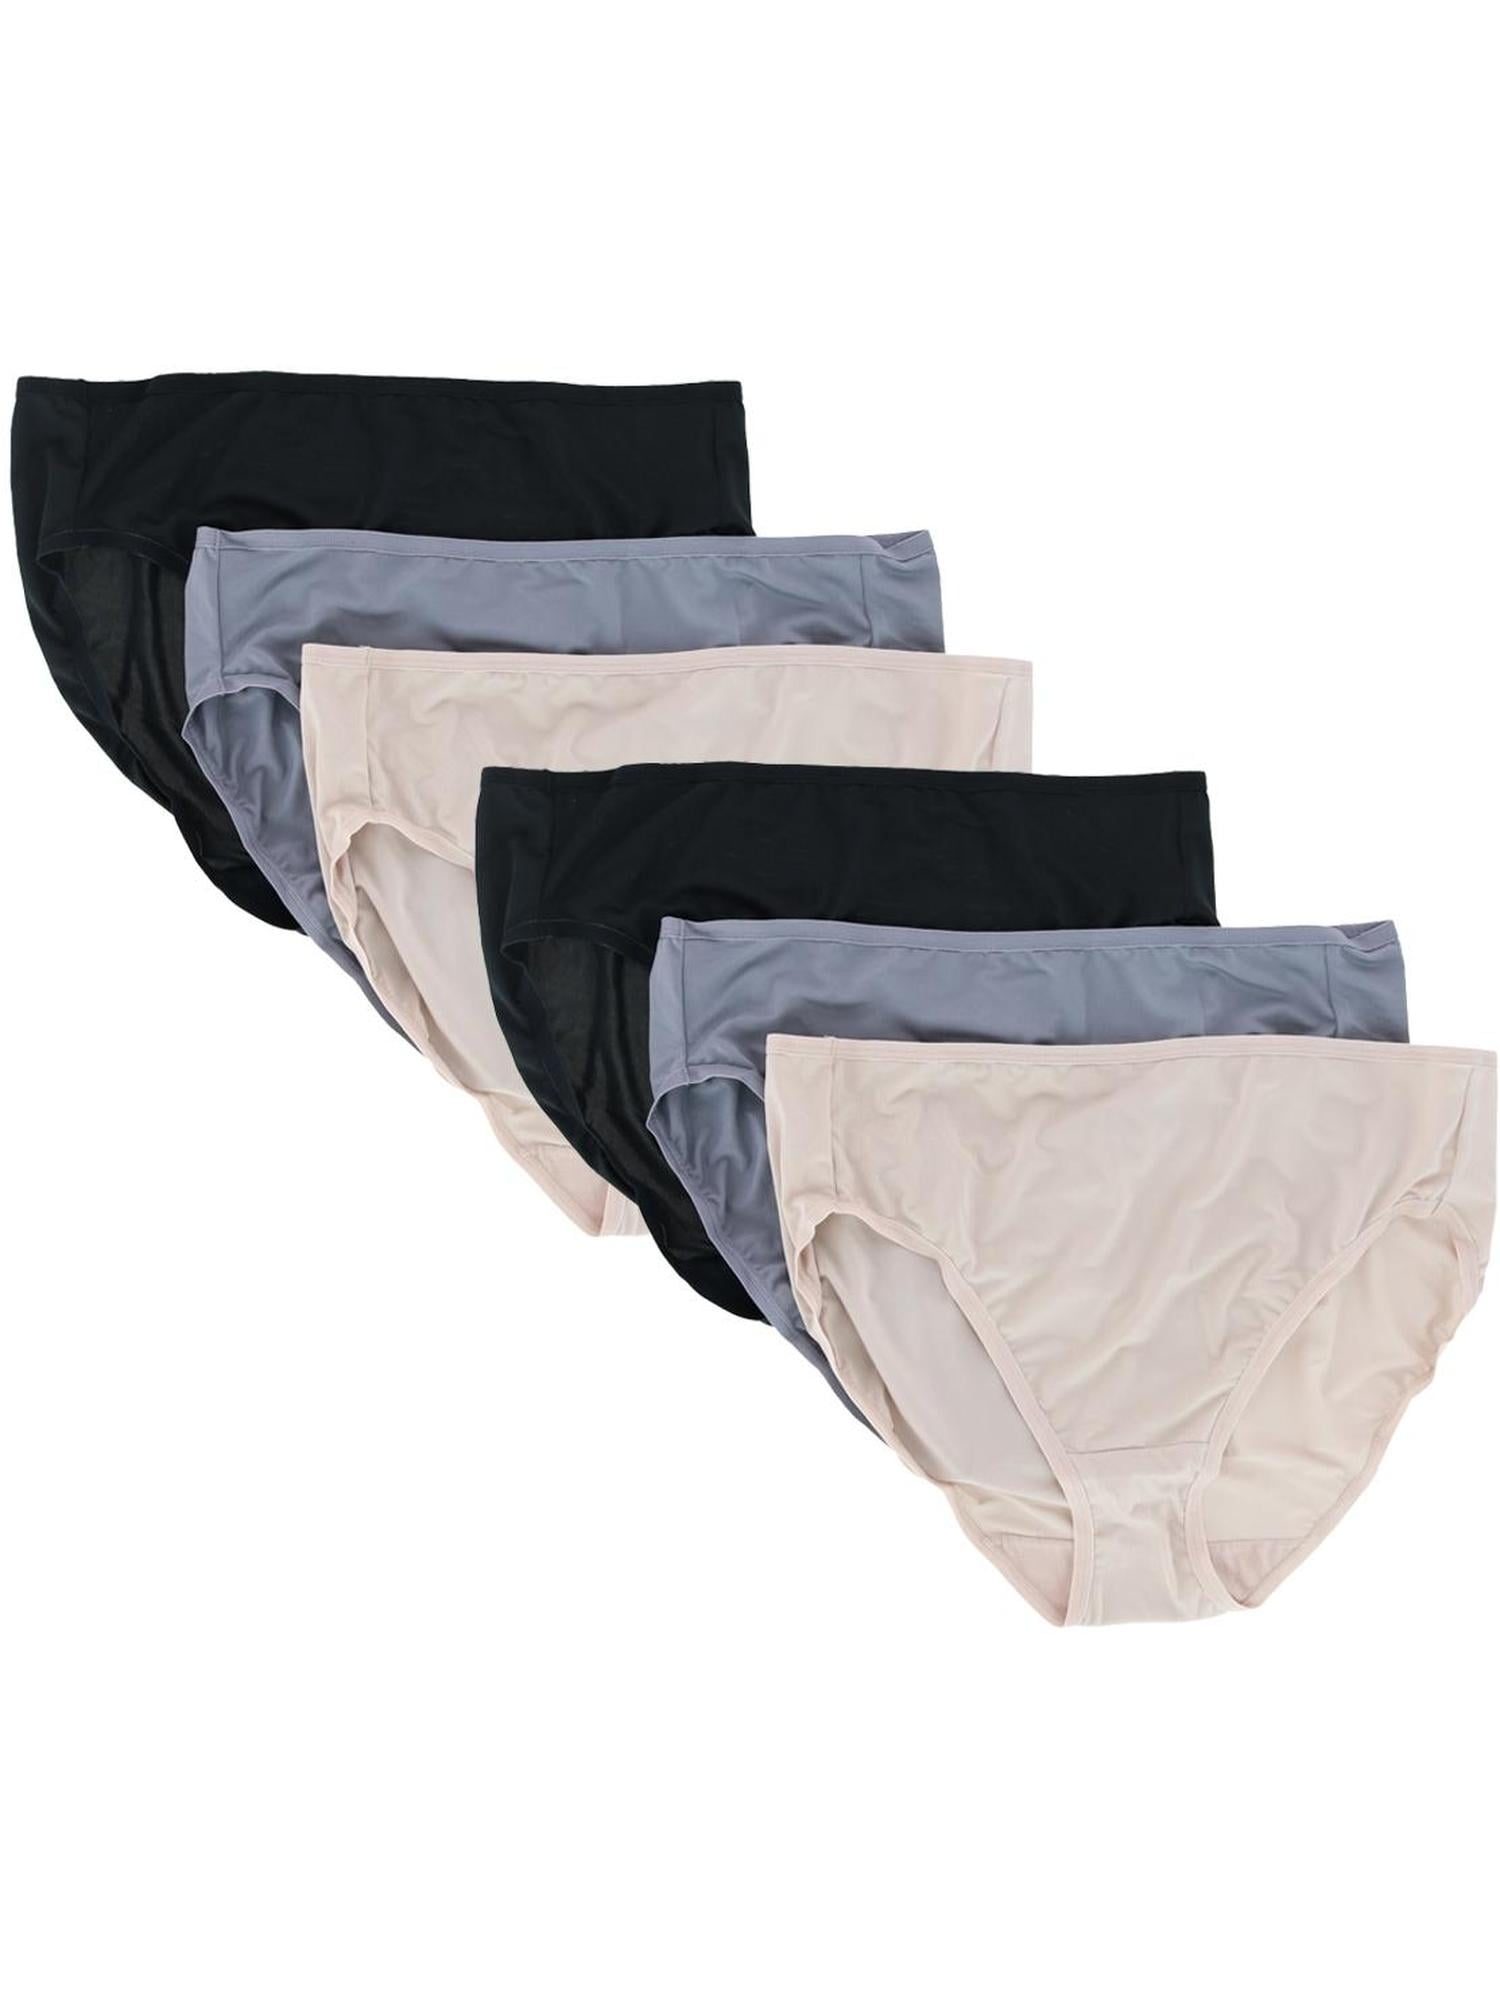 Fruit of the Loom Women's Microfiber Hi-Cut Underwear, 6 Pack